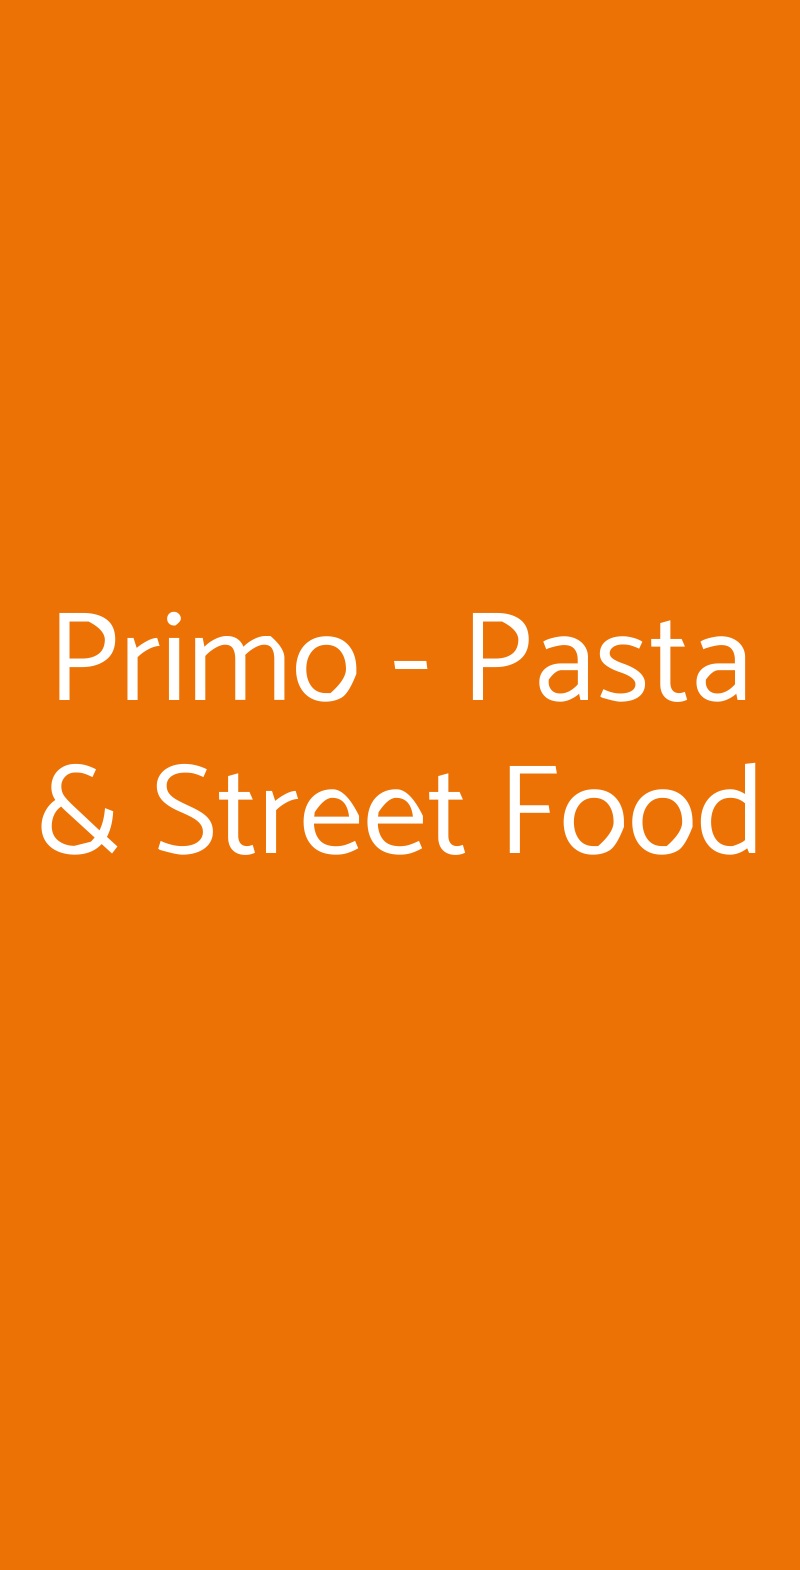 Primo - Pasta & Street Food Pisa menù 1 pagina